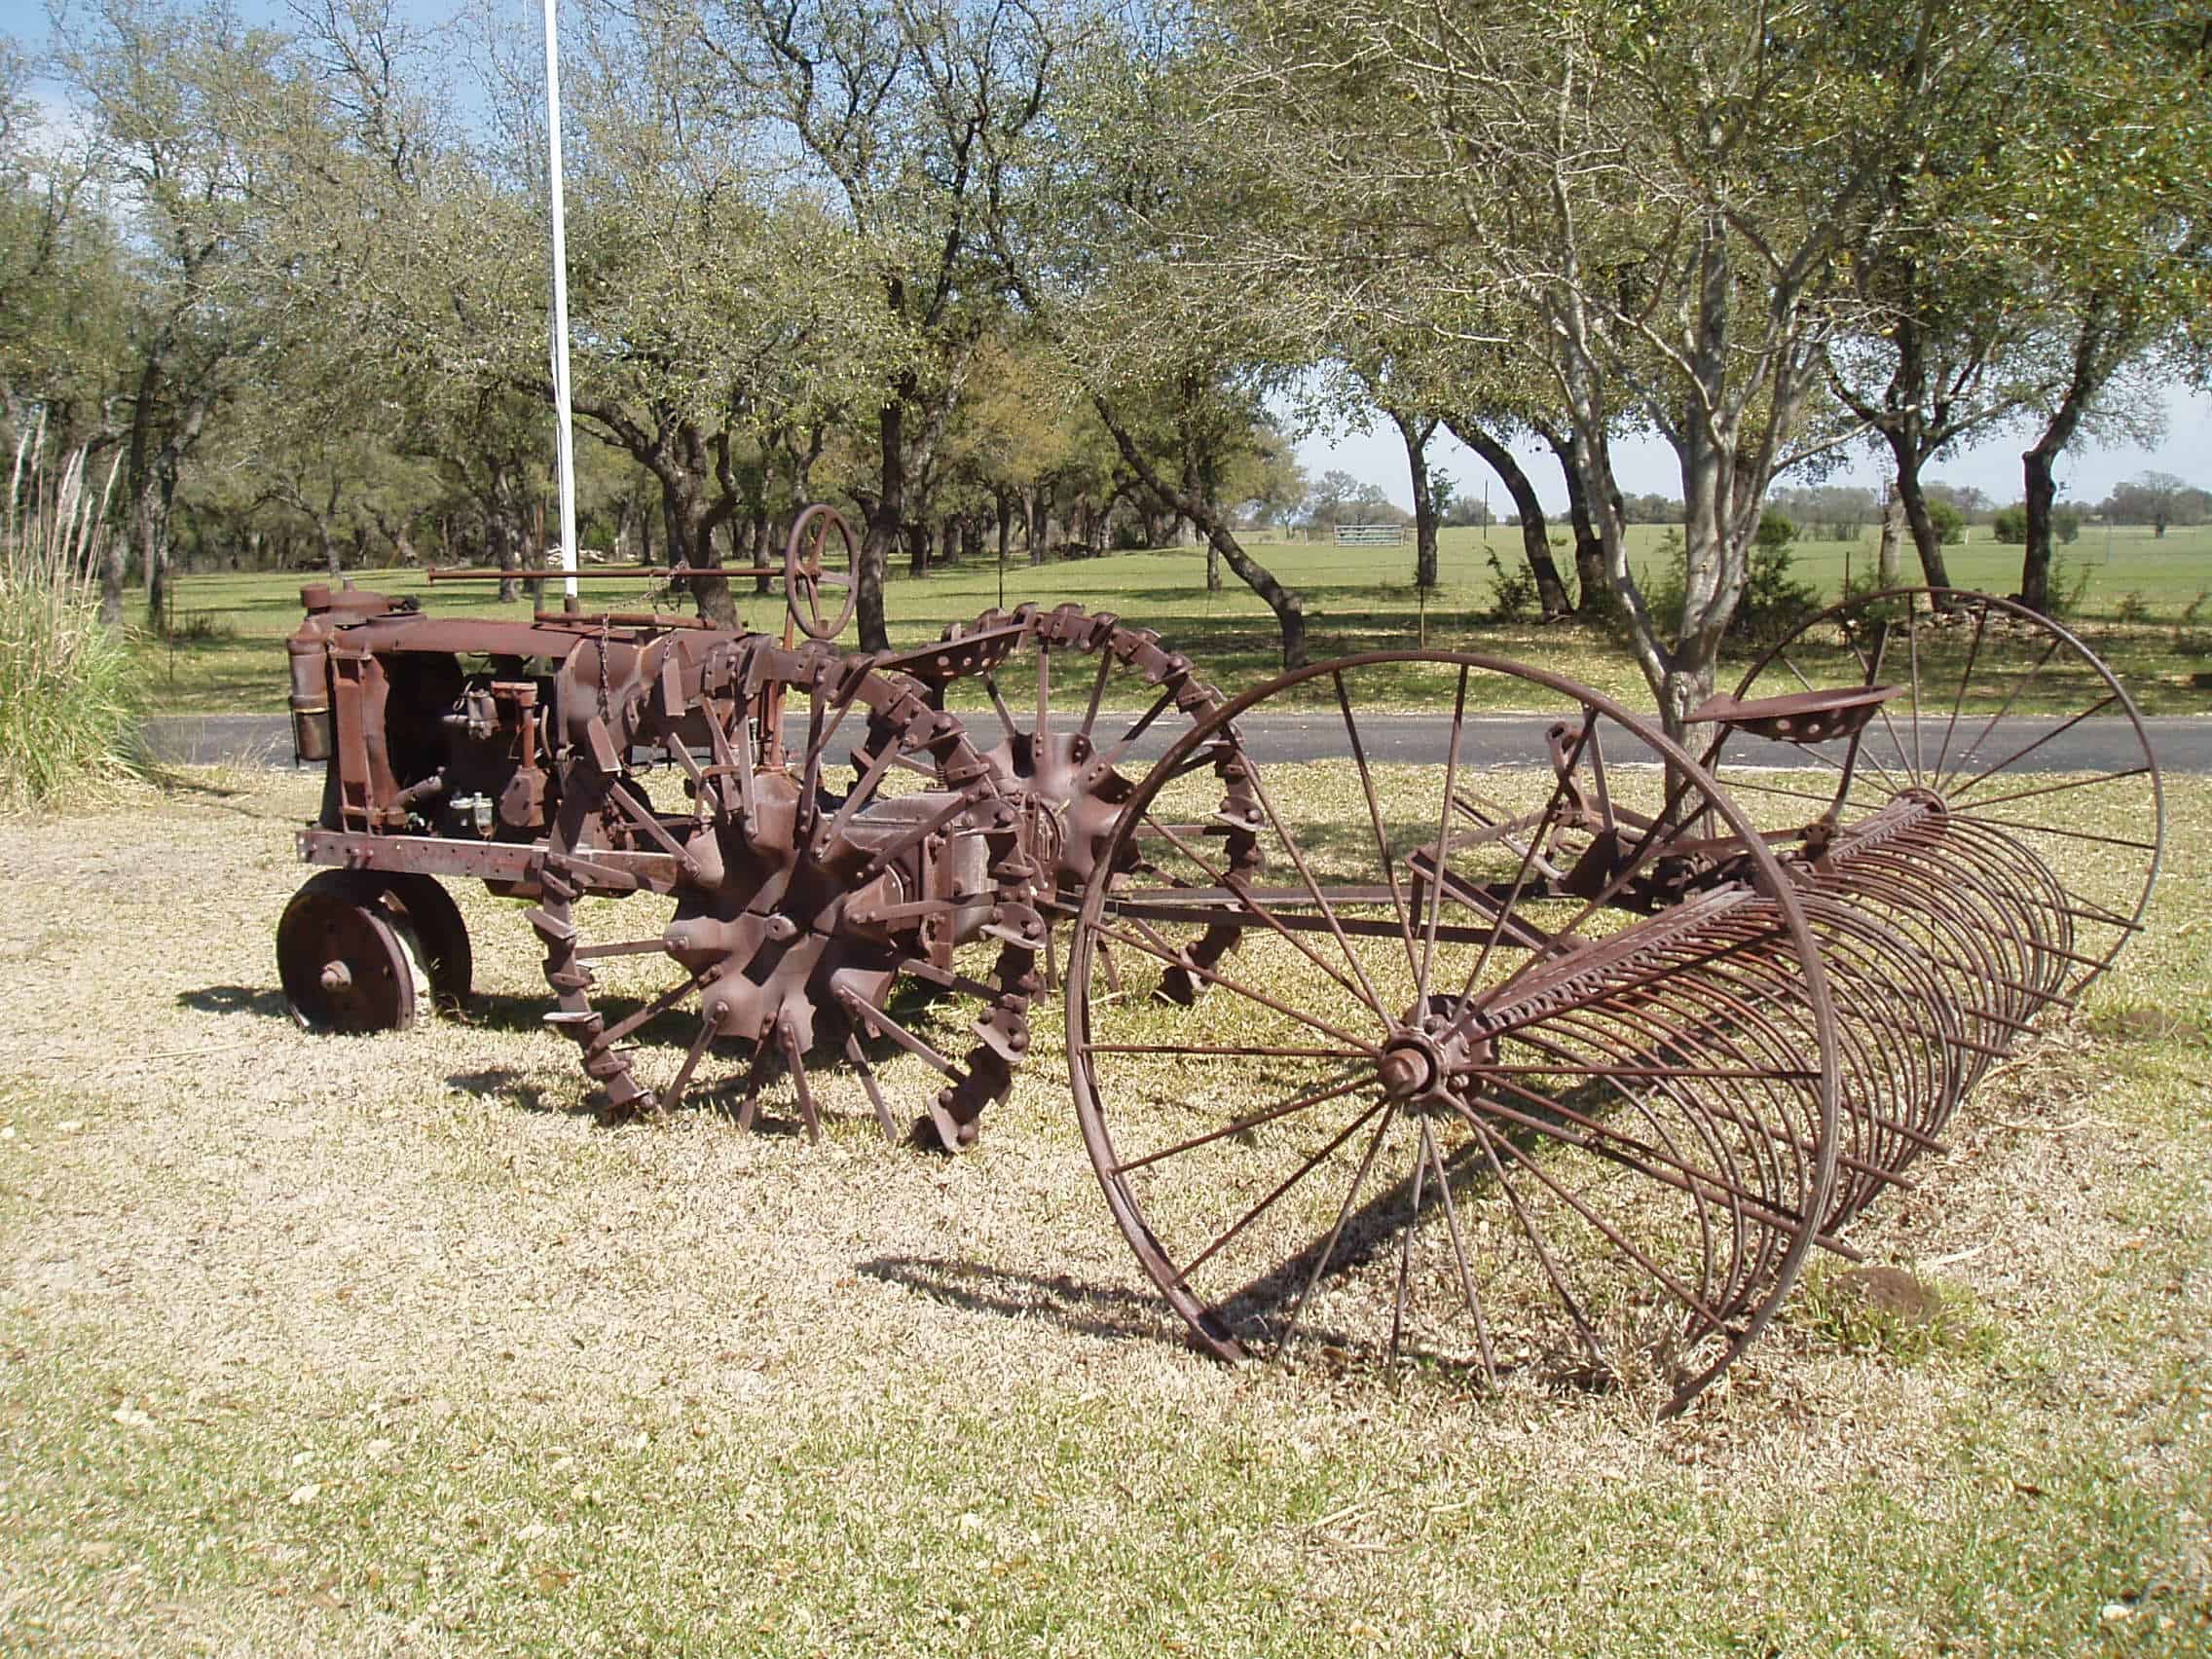 Tractor-drawn rakes